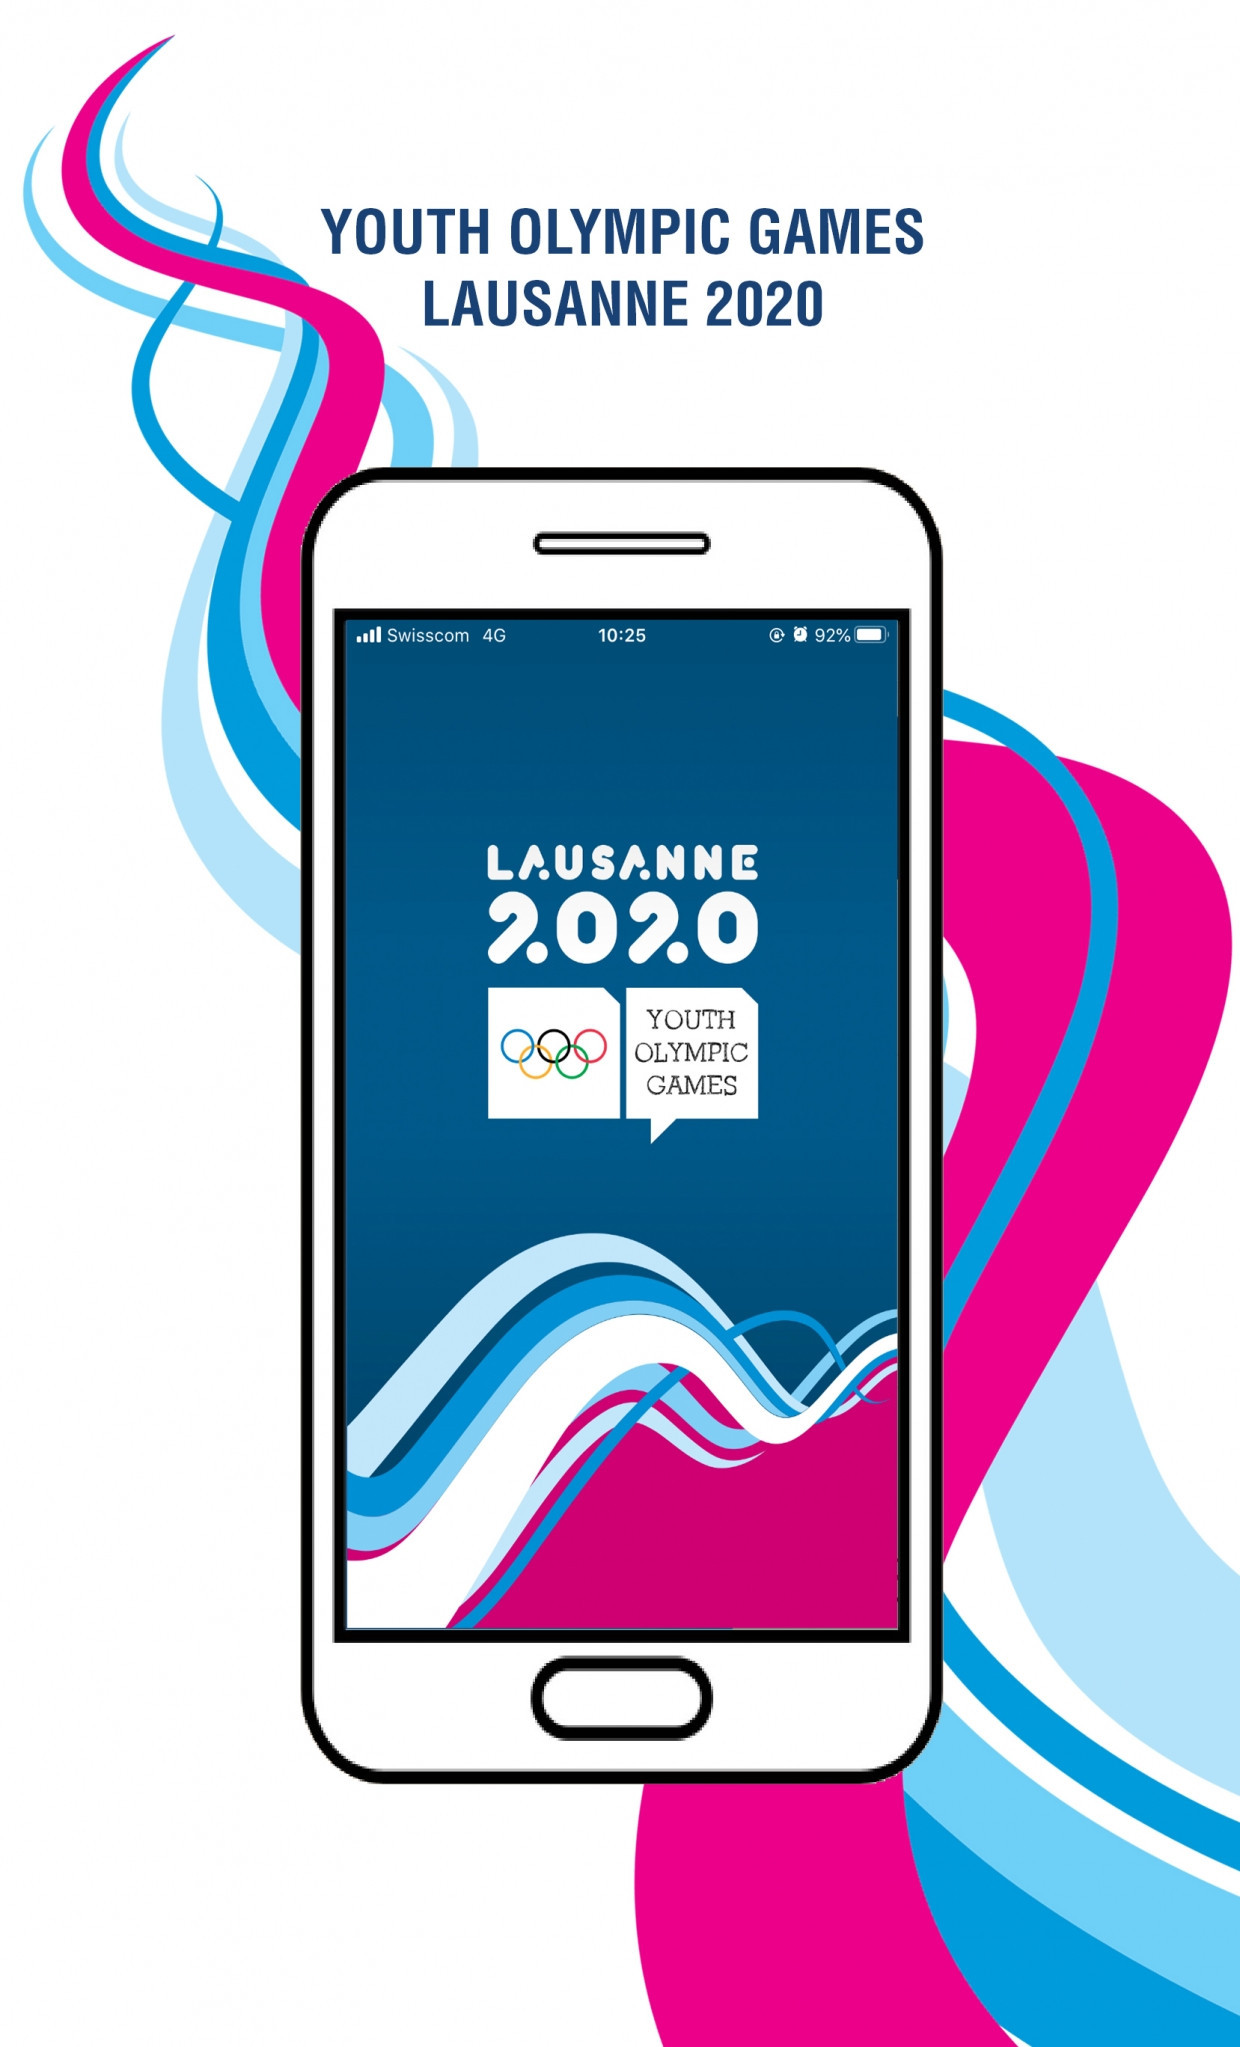 Lausanne 2020 has launched its mobile app ©Lausanne 2020